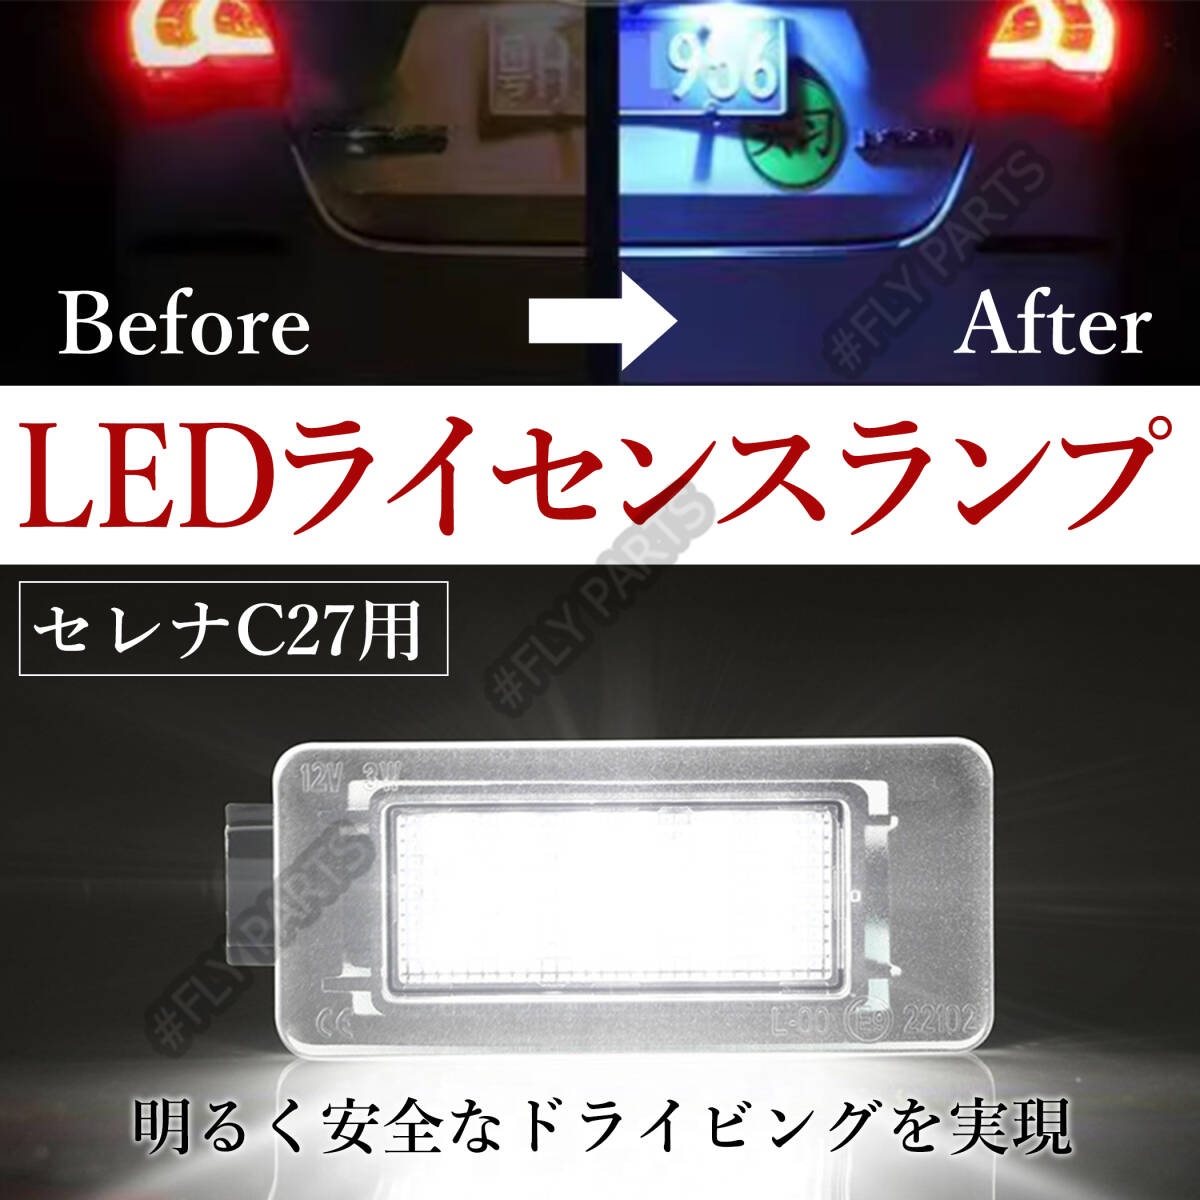 LED ナンバー灯 セレナ ライセンスランプ C27 日産 ホワイト 専用設計 前期 後期 純正交換 C27系 SERENA 2個セット E-POWER対応 送料無の画像1